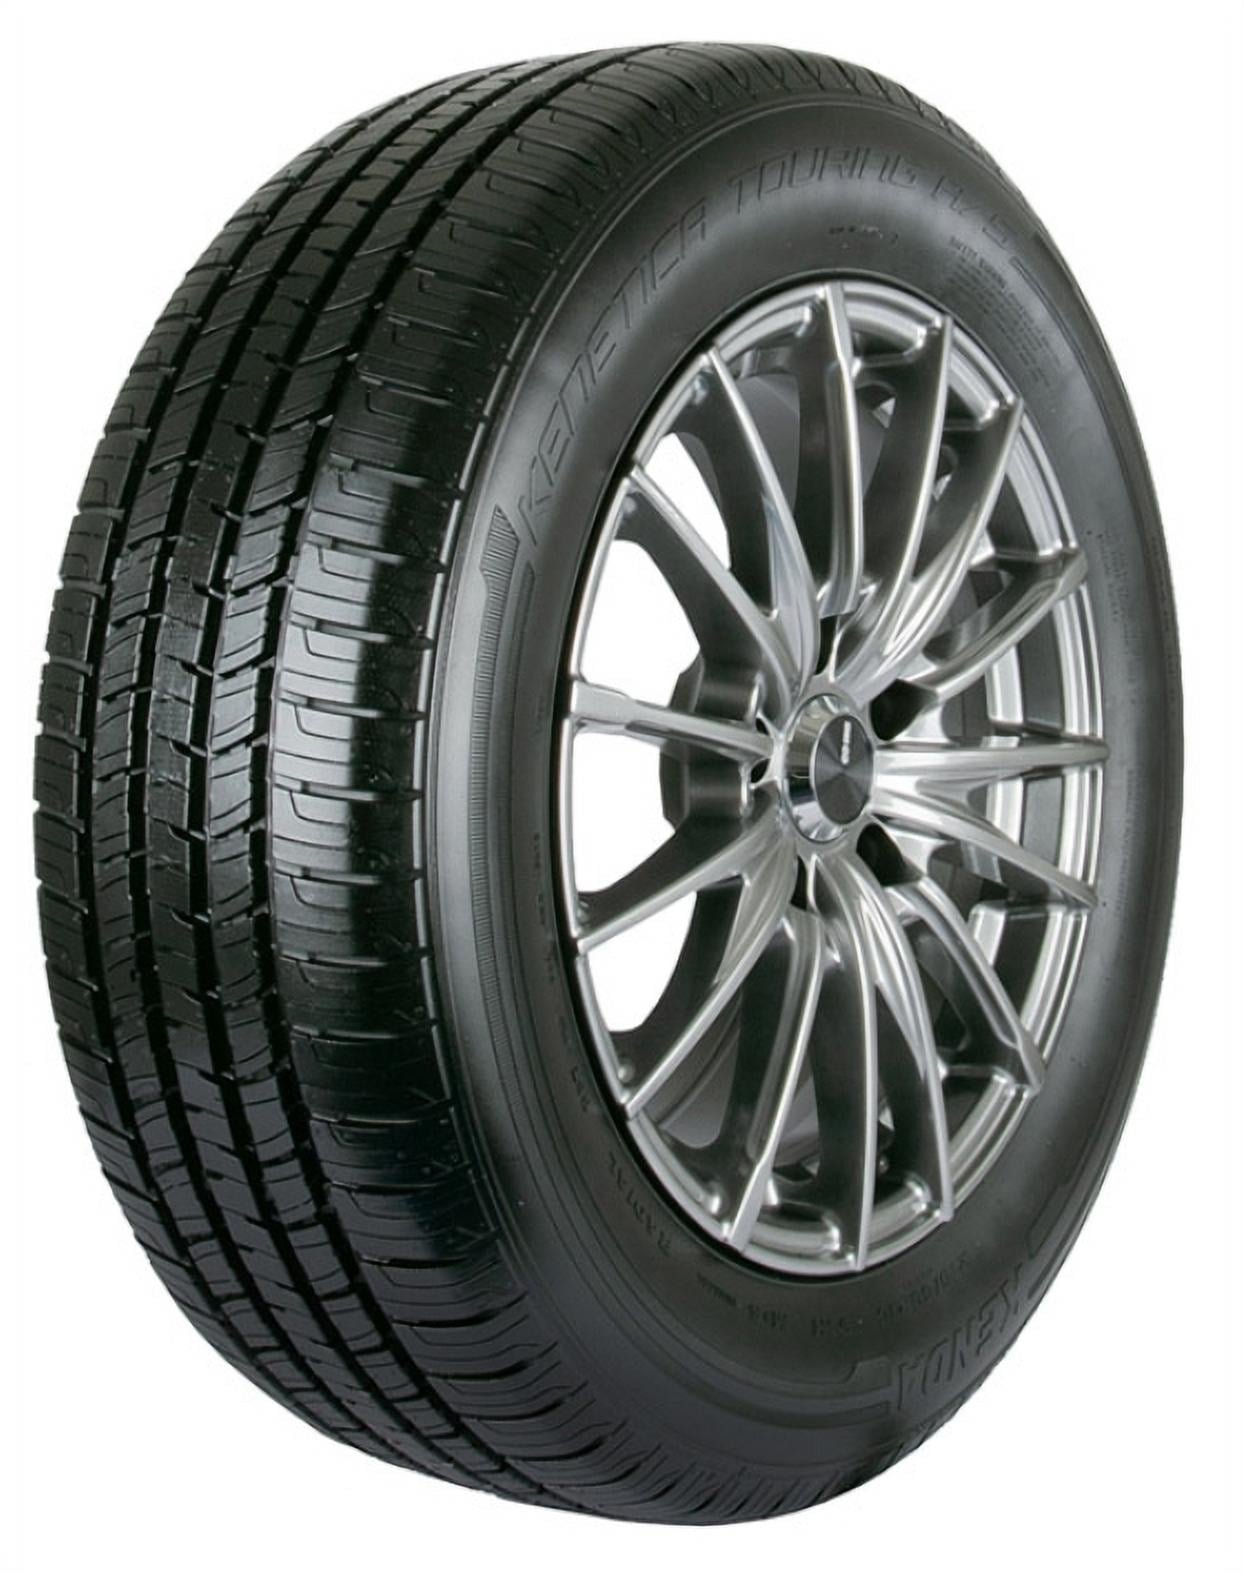 1 2 4 235/60r16 New Tyres 235 60 16 SUV 2356016 100H HIFLY Kia Hyundai 4x4 